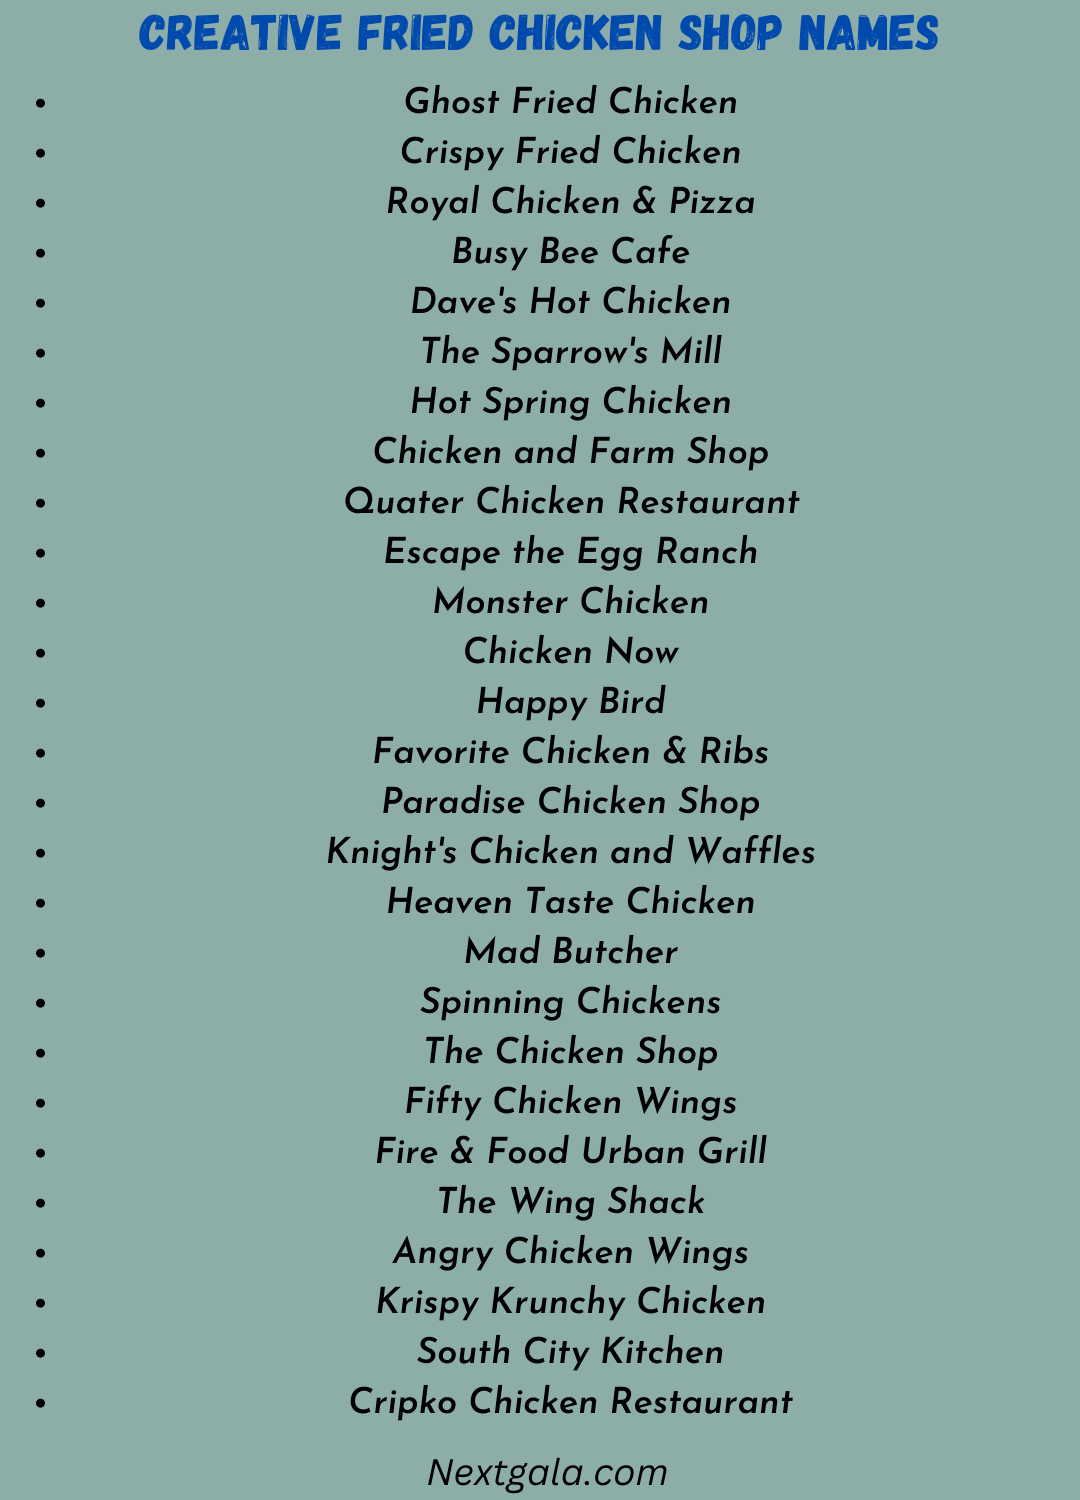 Creative Fried Chicken Shop Names